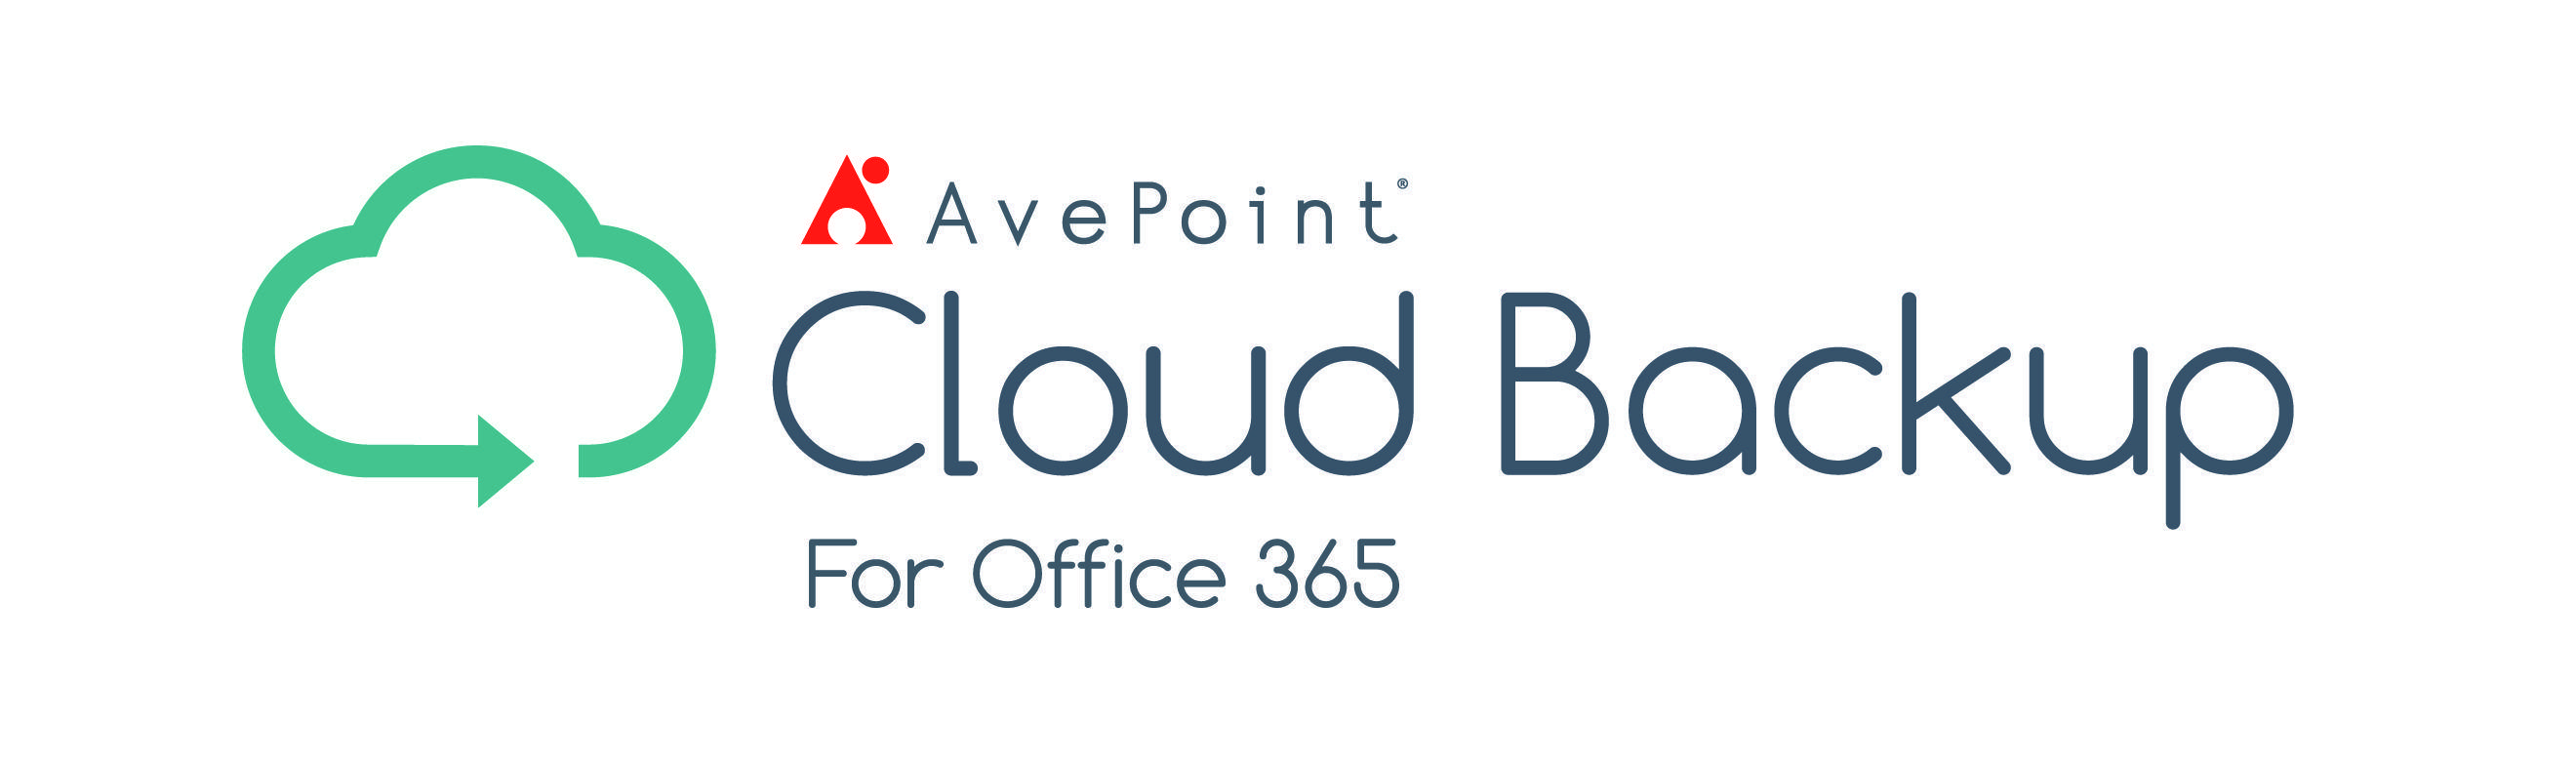 O365 Logo - Cloud Backup for O365 Logo | AvePoint Blog